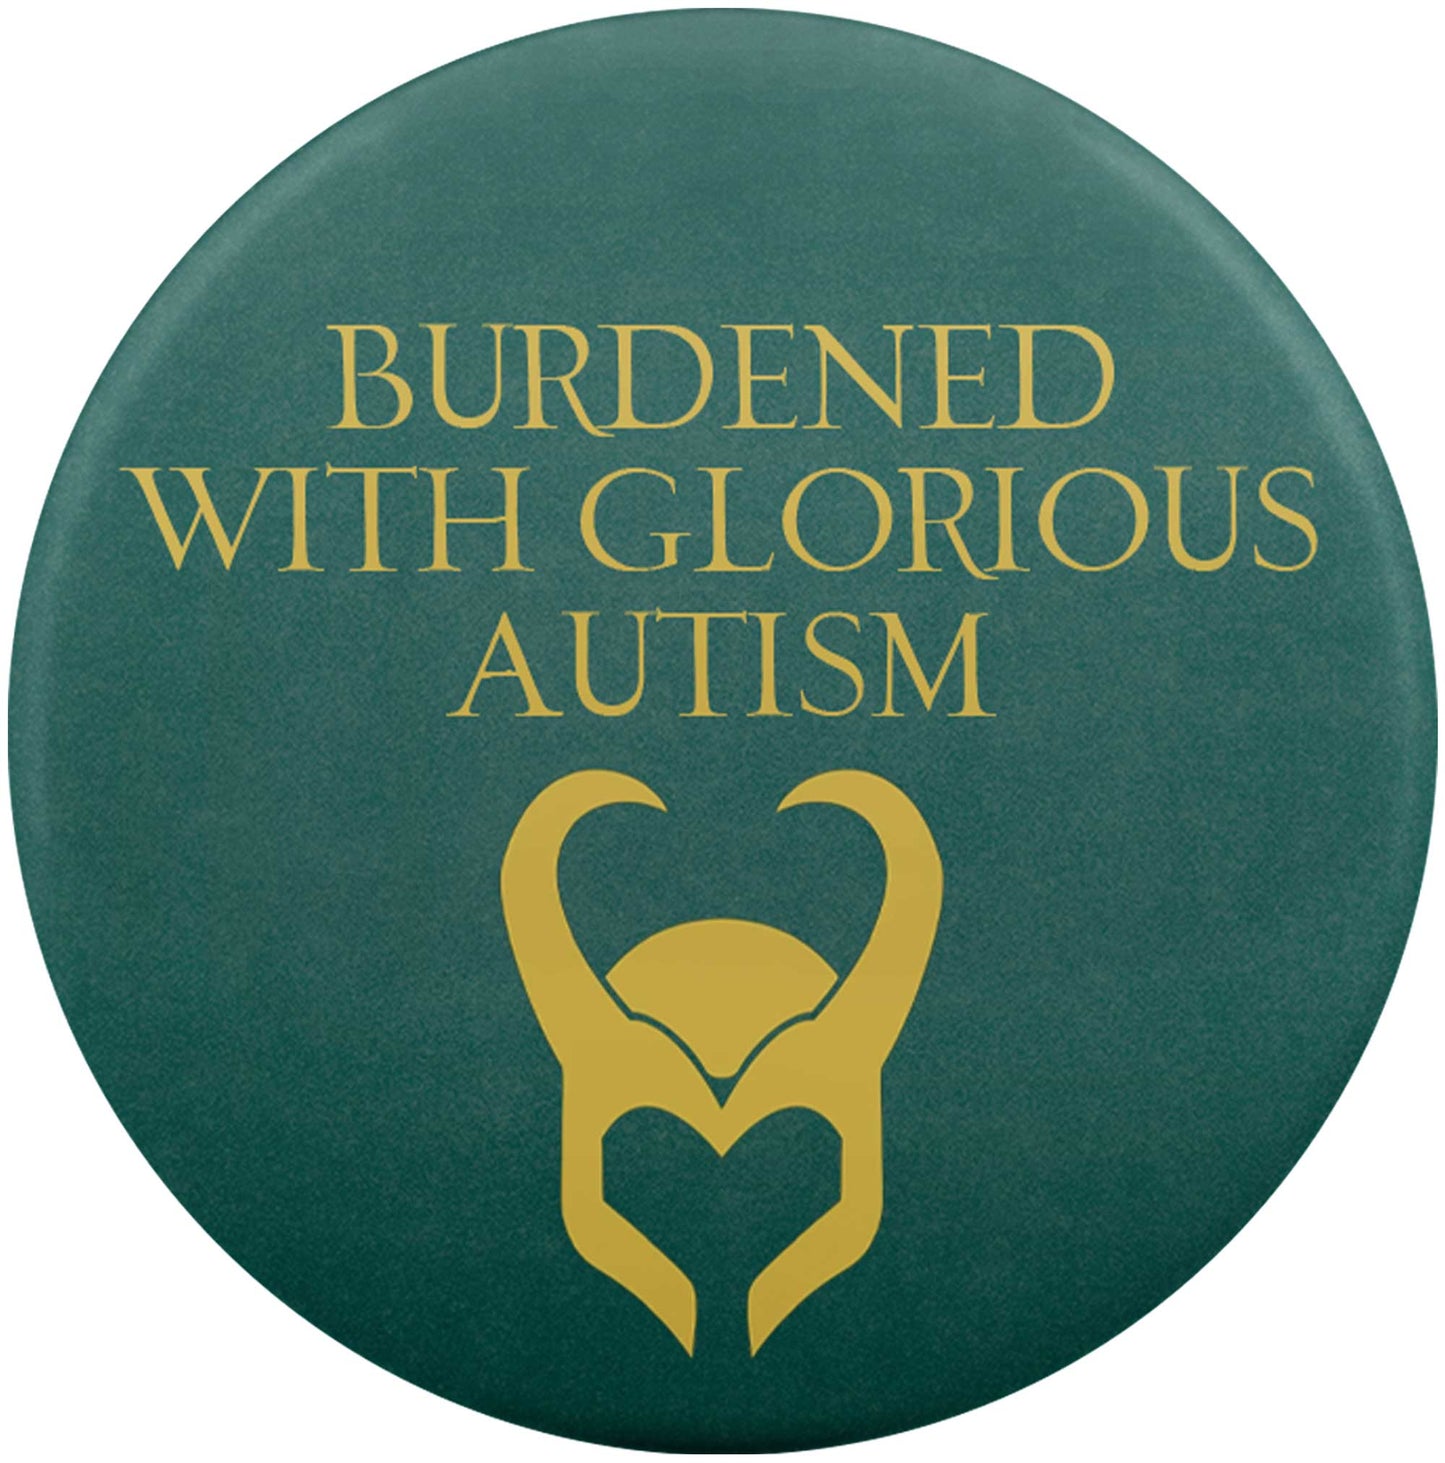 Burdened With Glorious Autism